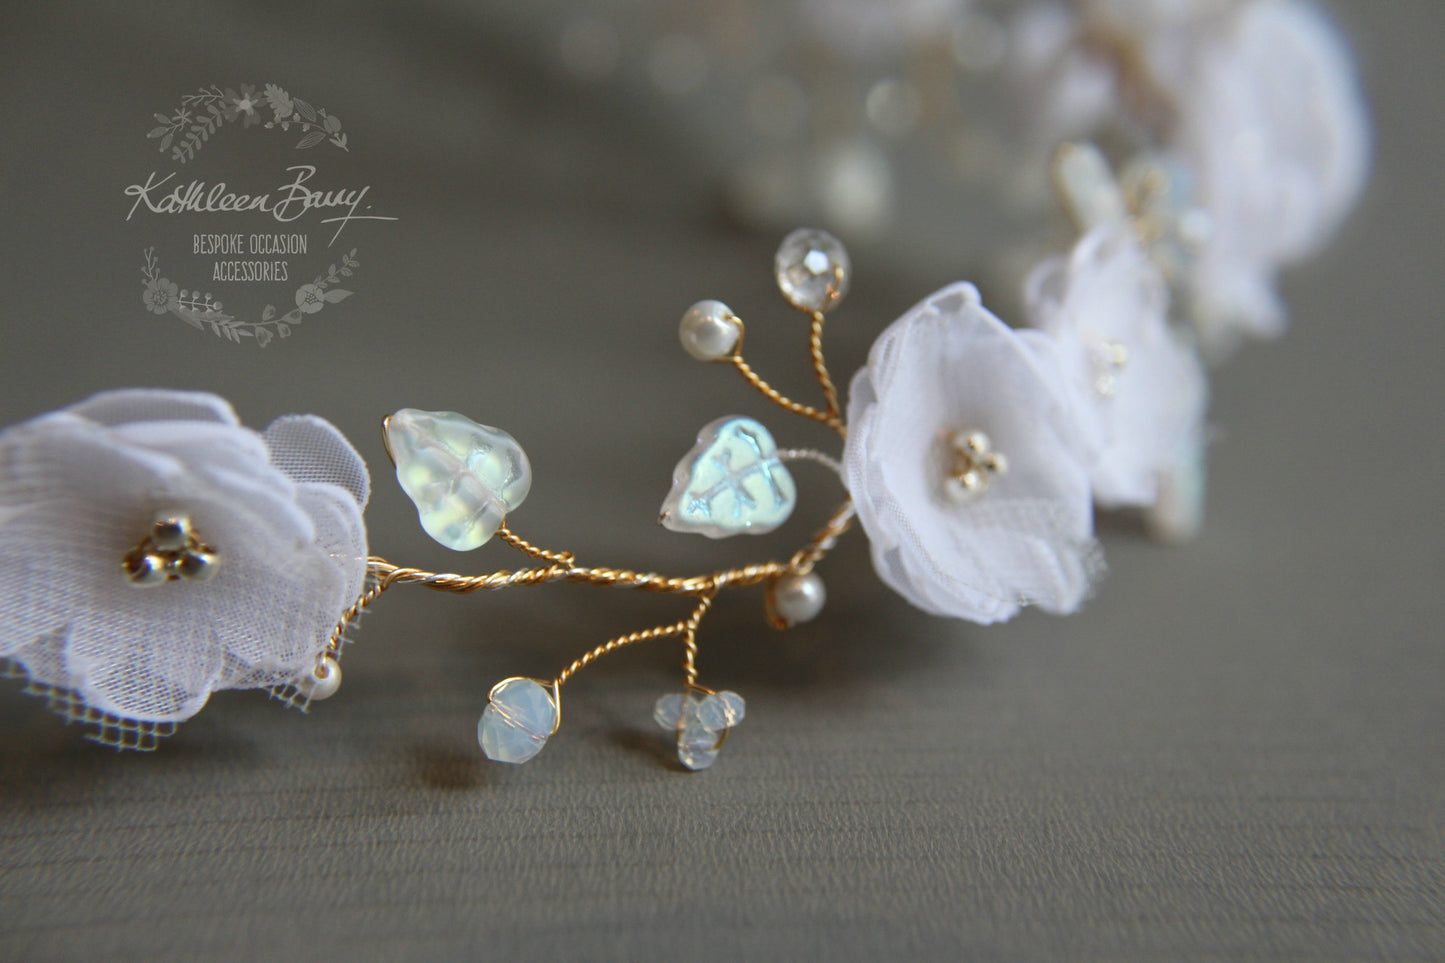 Lilly-Belle Aqua Gold white hair vine, blossom wedding bridal hair accessory wedding bride flower crown wreath - opalescent crystals - blue